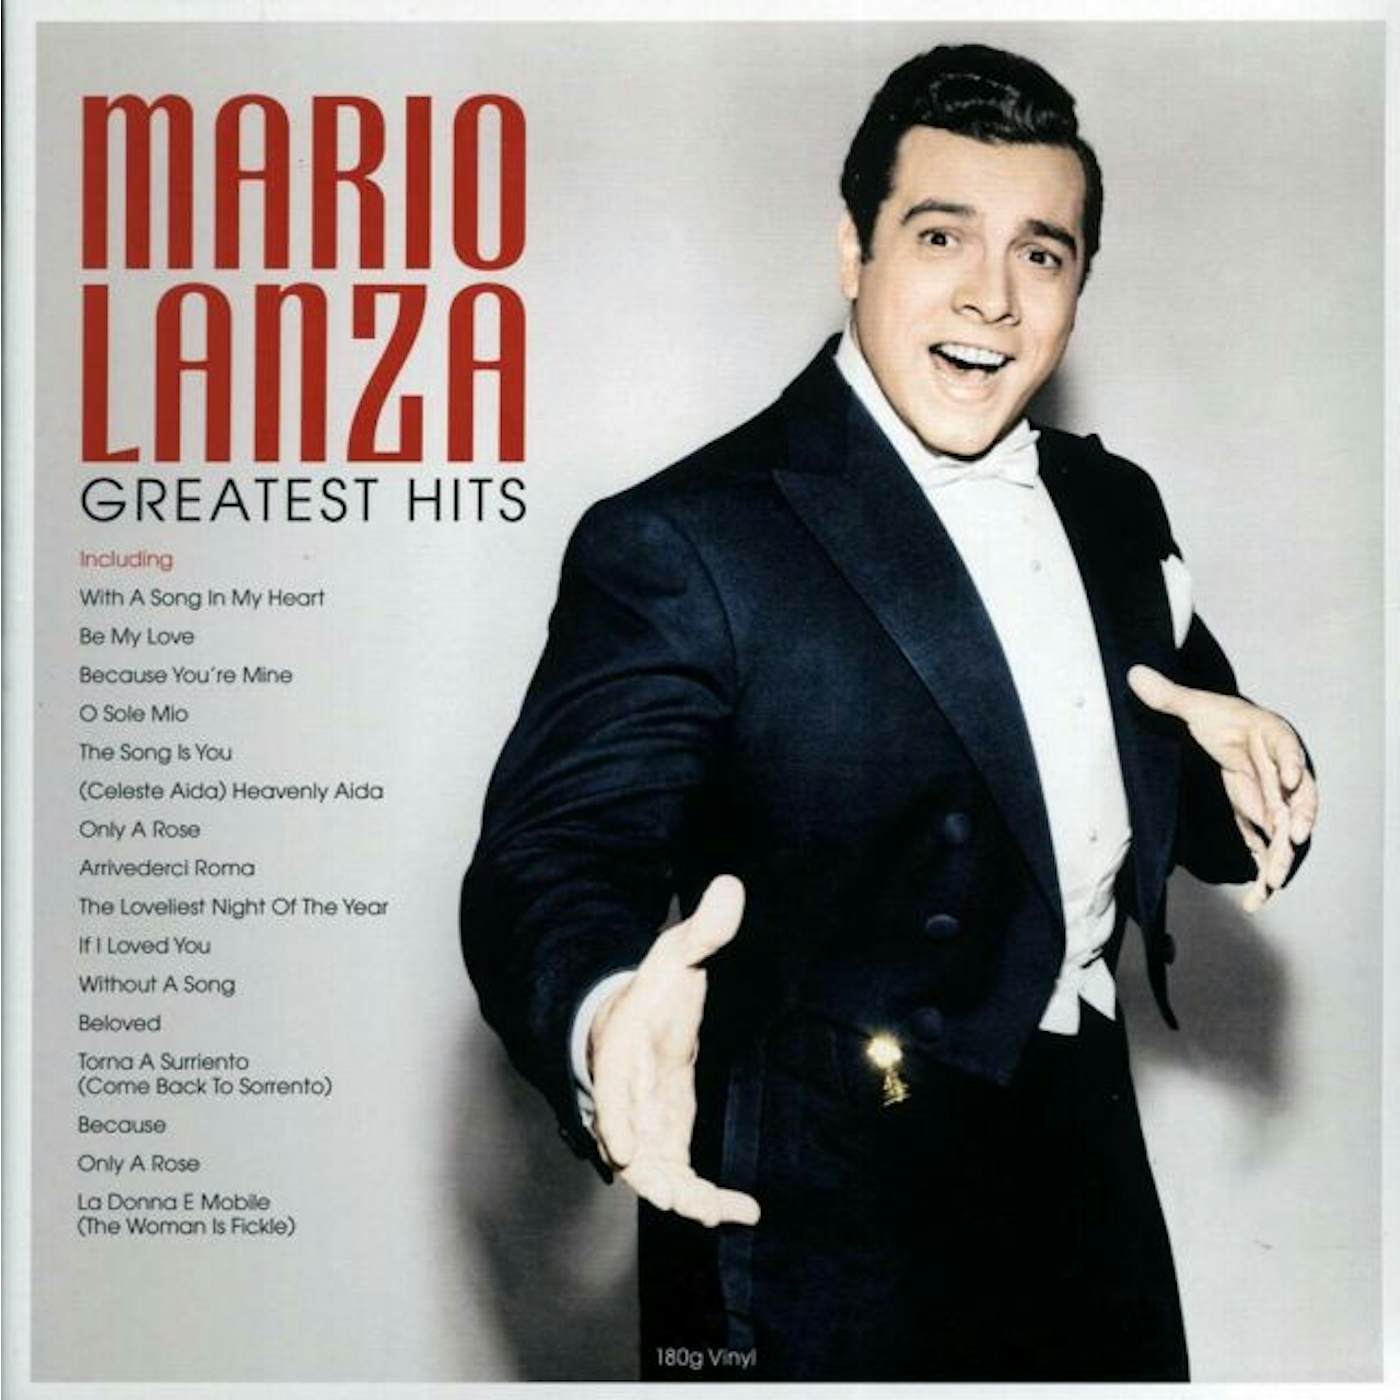 Mario Lanza Greatest Hits Vinyl Record